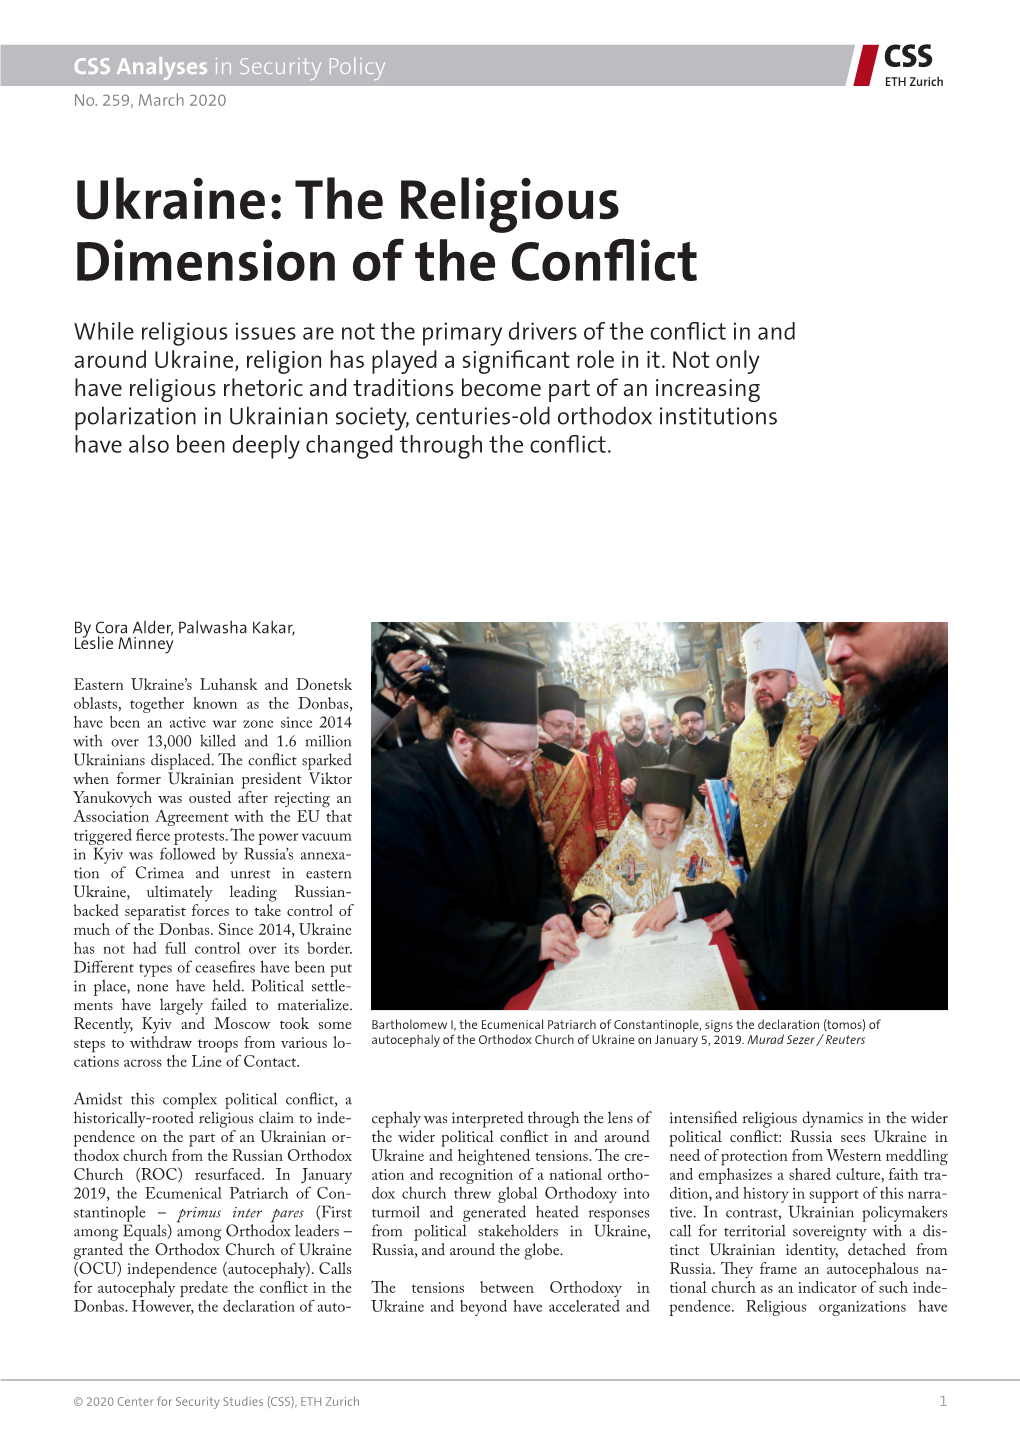 Ukraine: the Religious Dimension of the Conflict